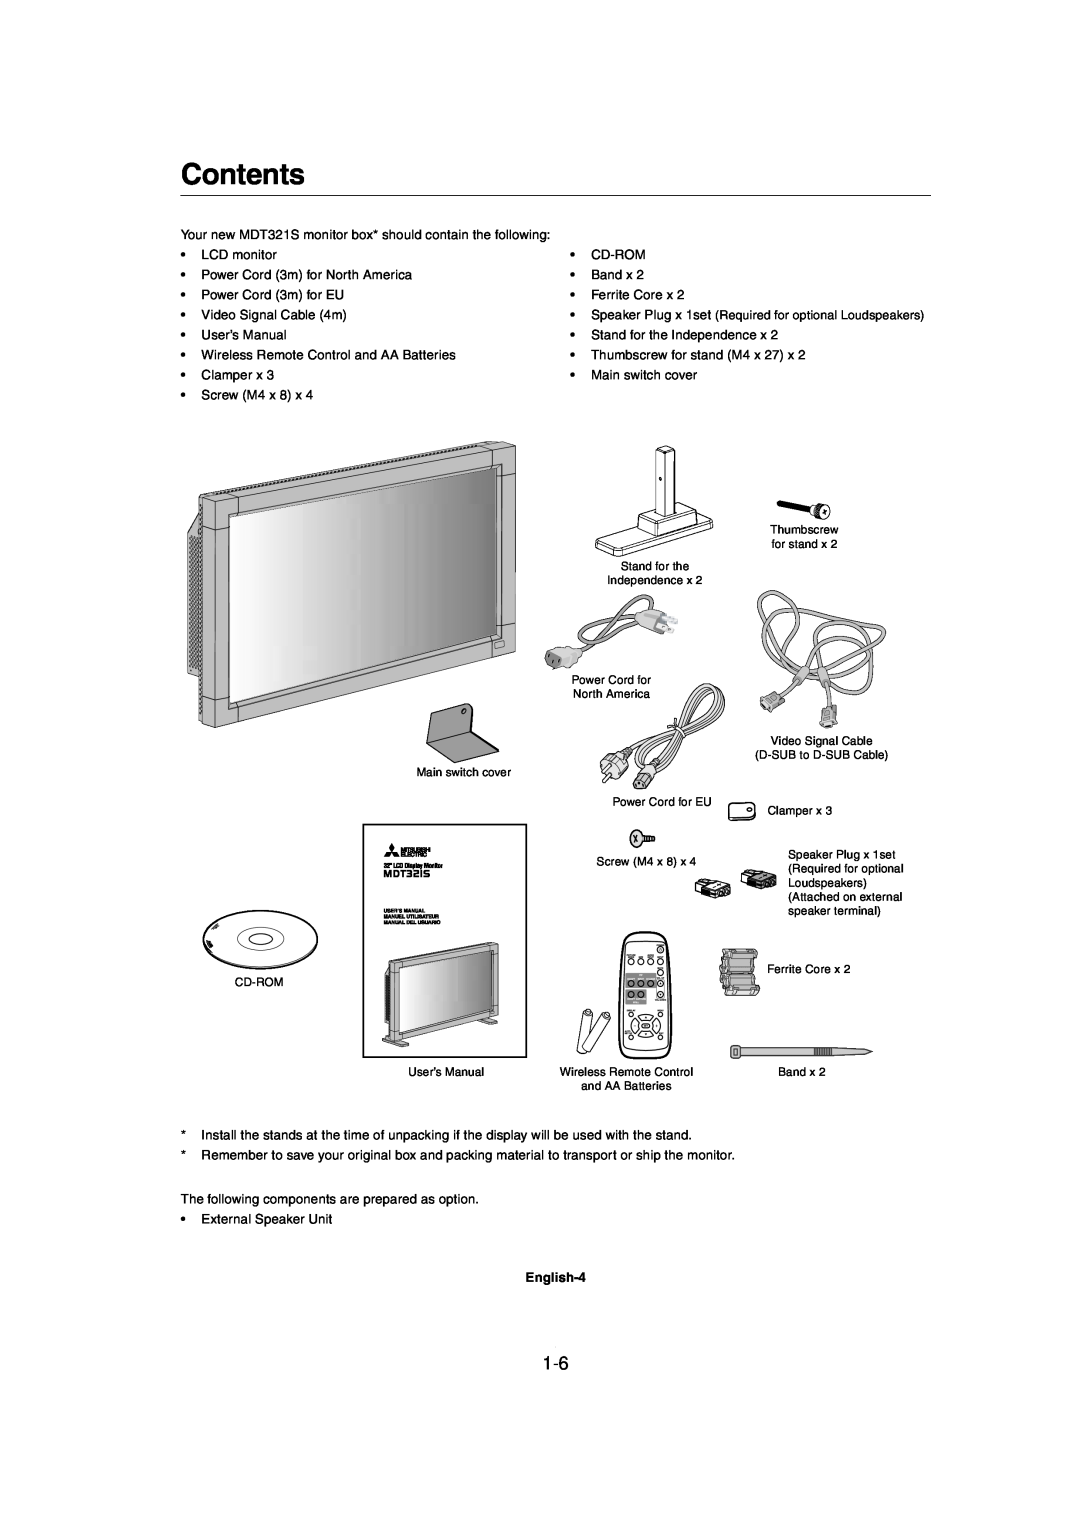 Mitsubishi Electronics MDT321S user manual Contents, English-4 